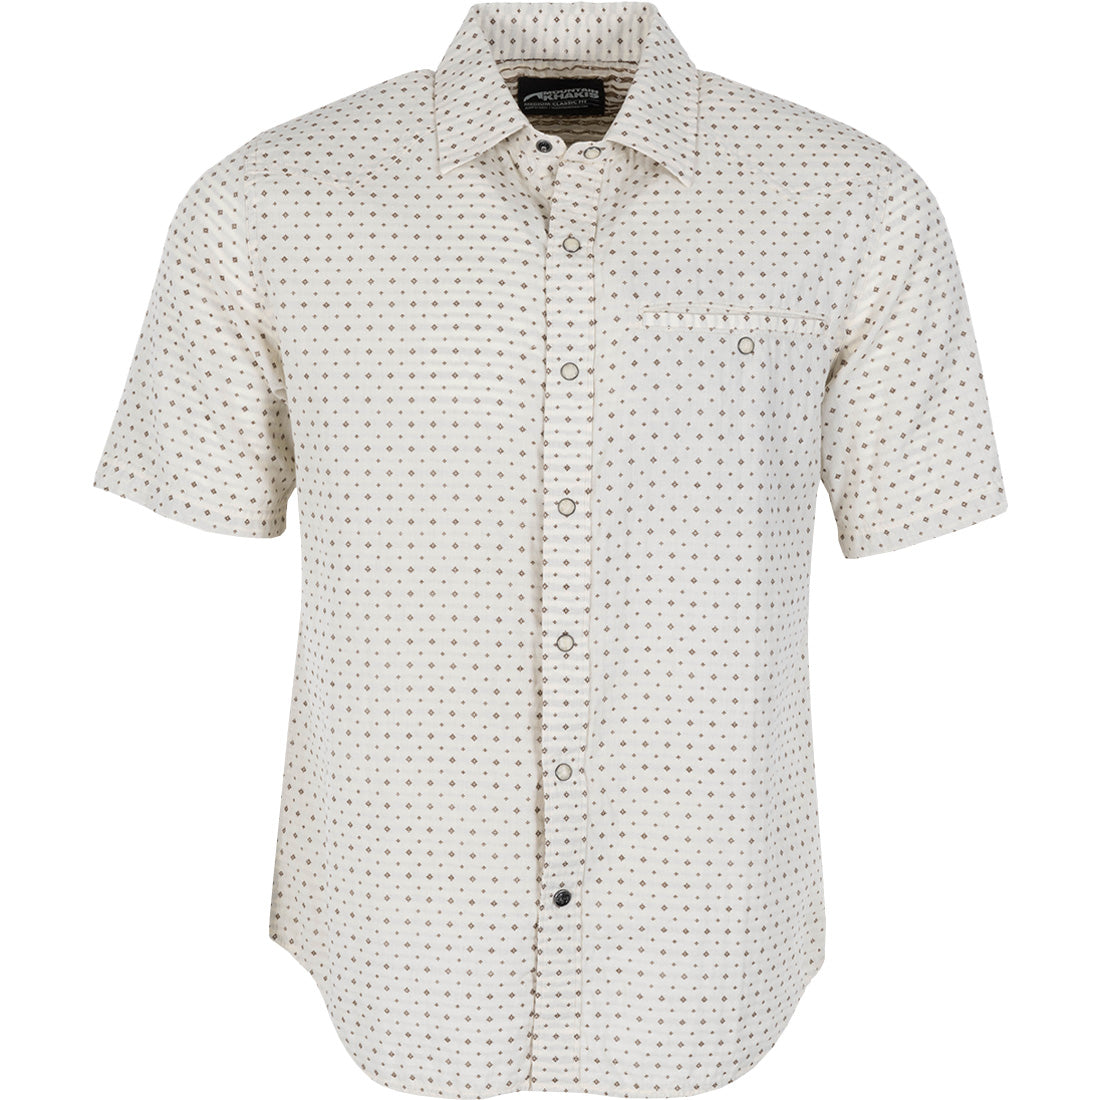 Mountain Khakis Easton Dobby Short Sleeve Shirt - Men's